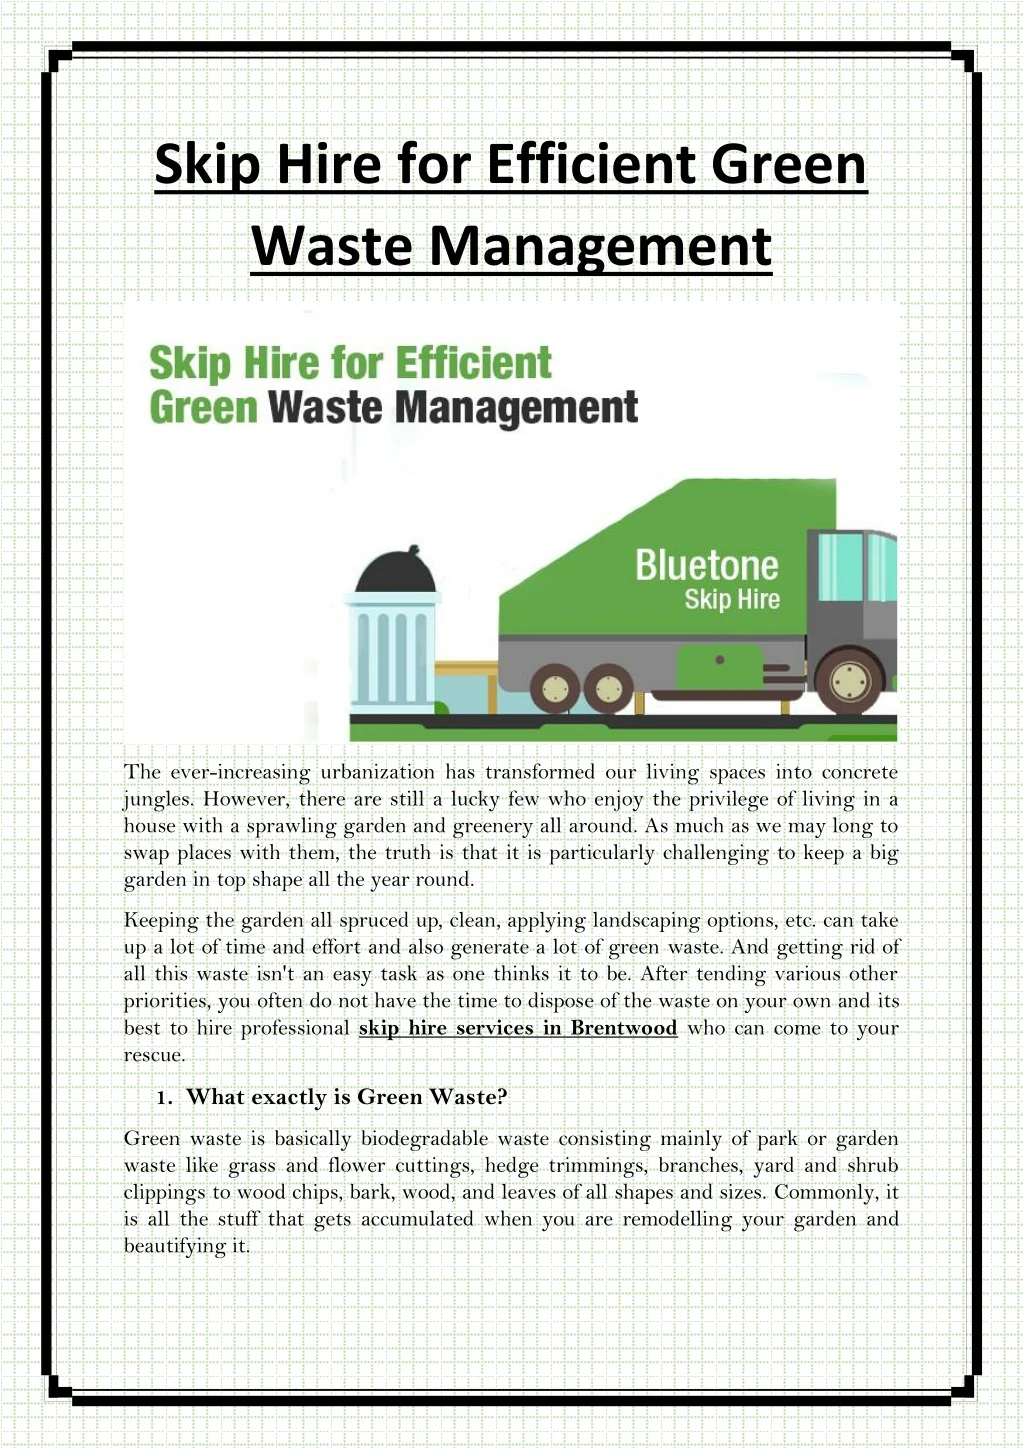 skip hire for efficient green waste management